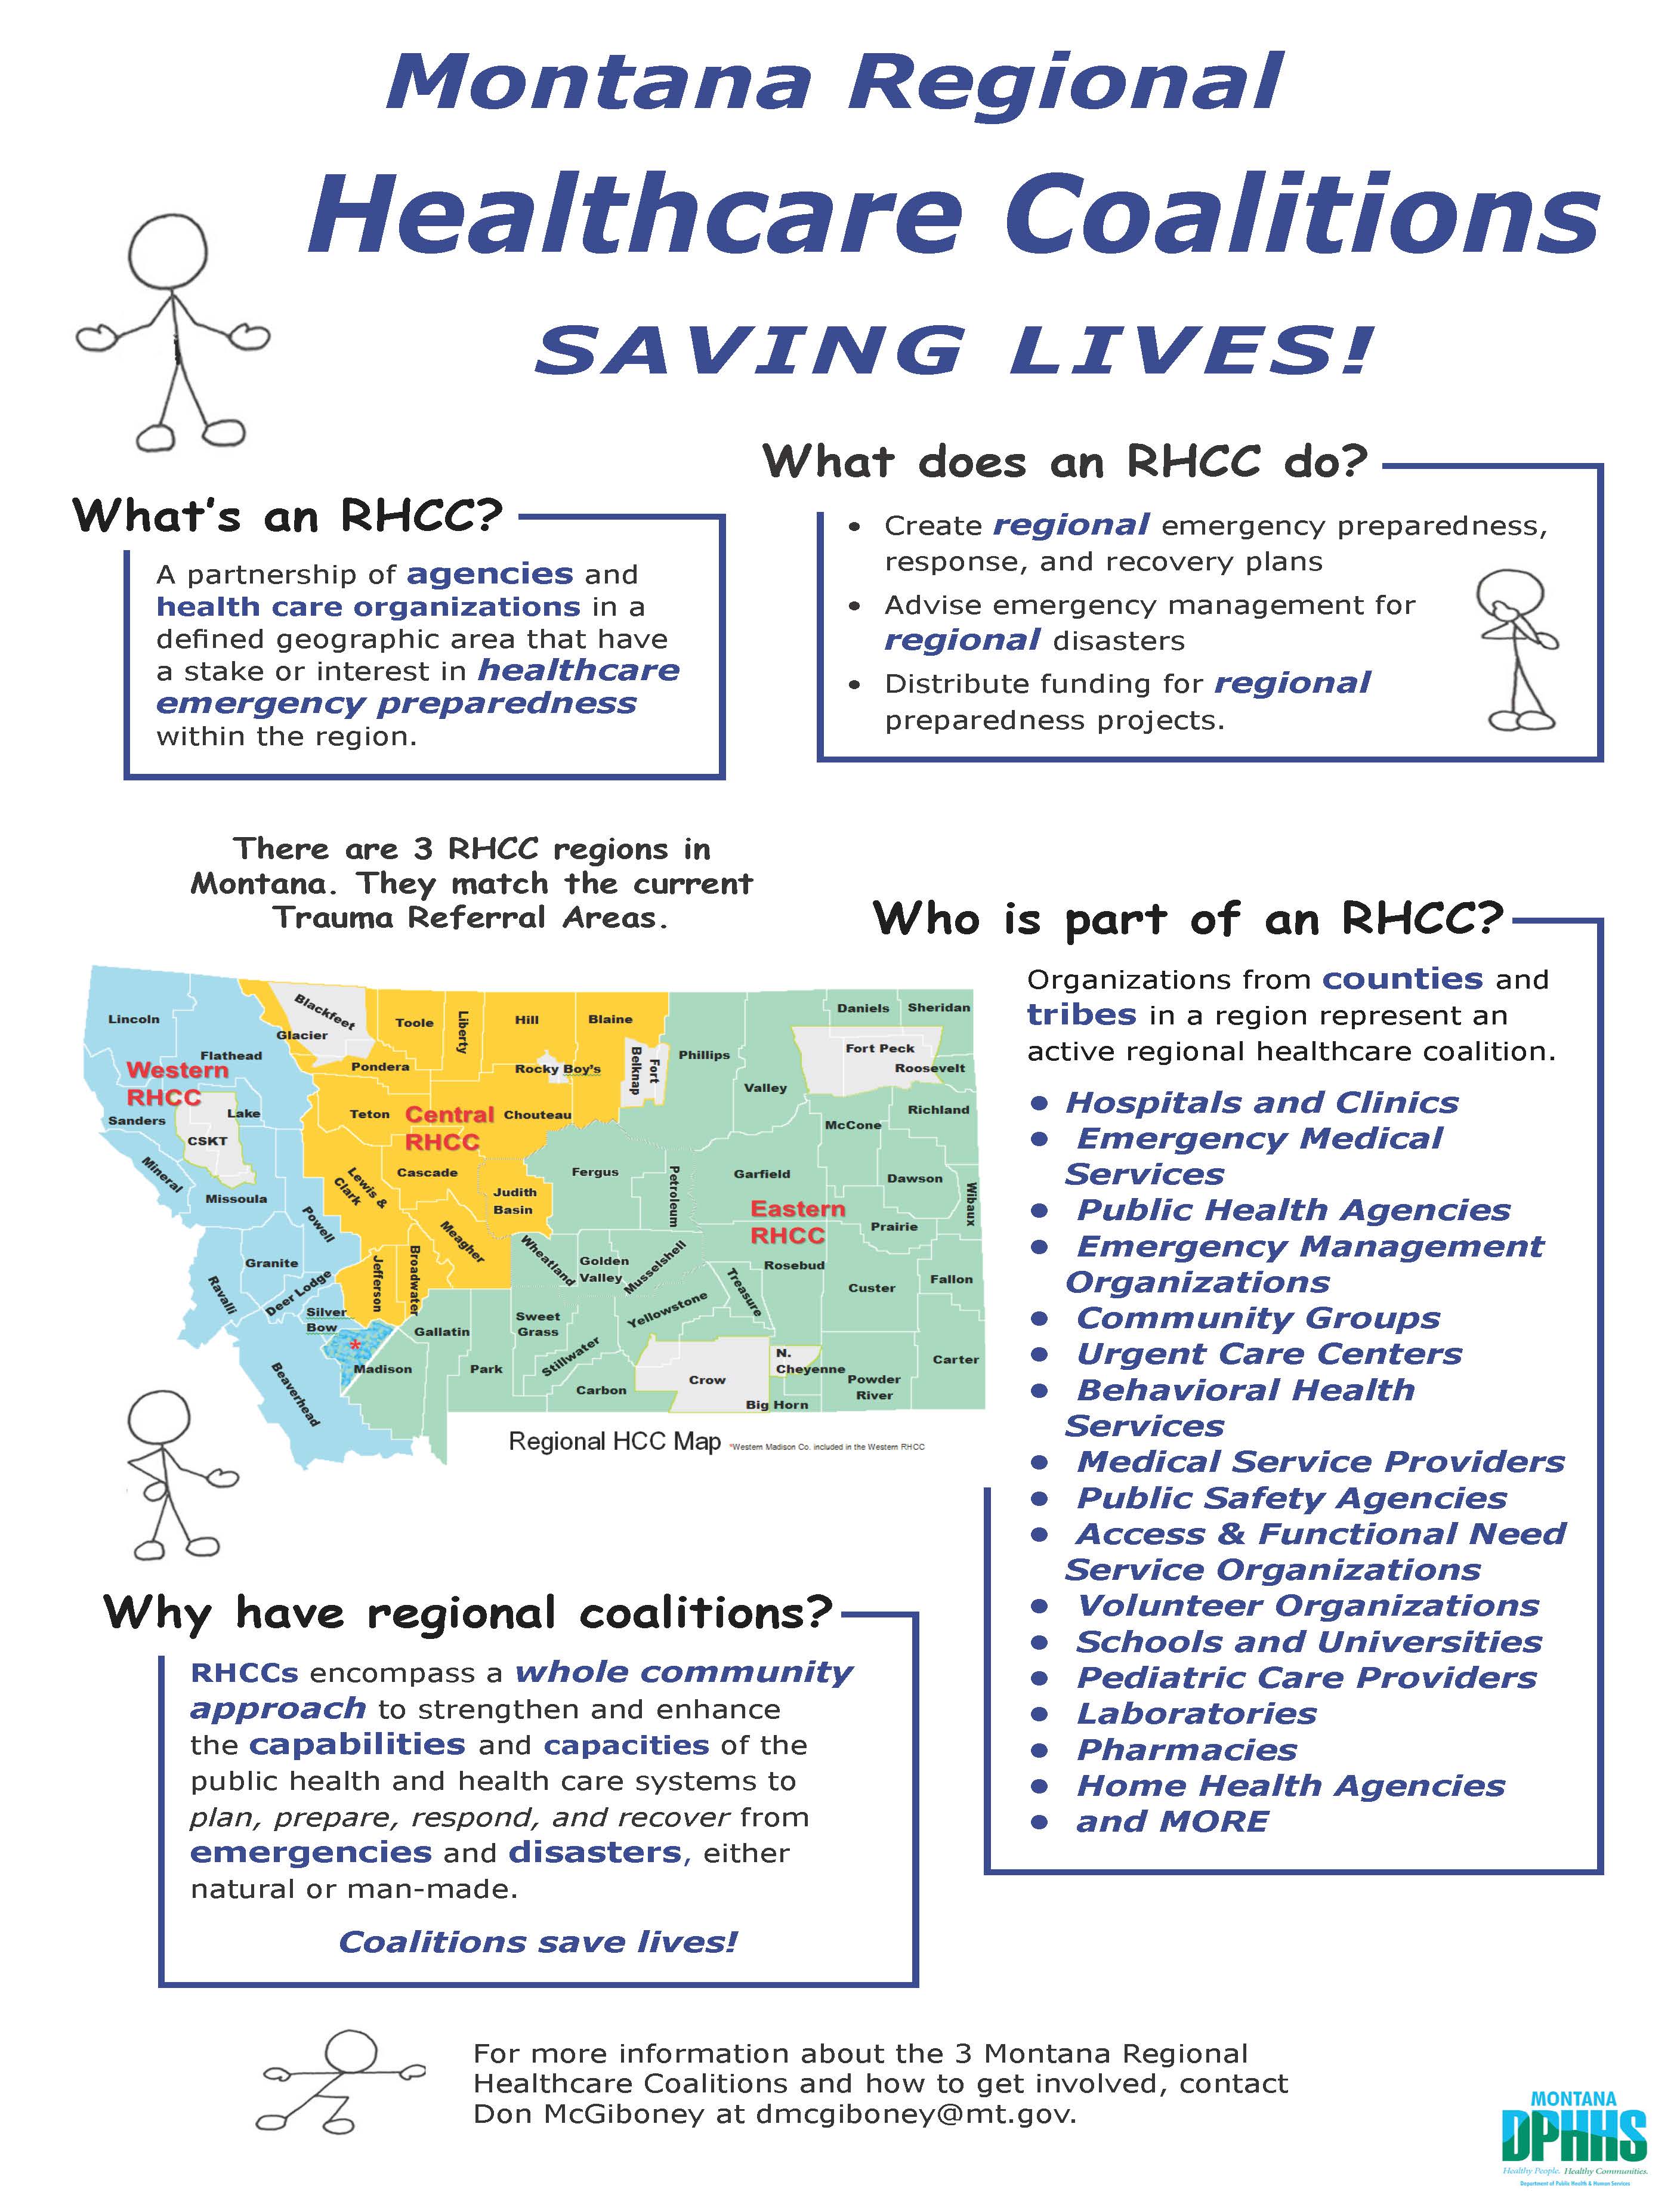 Montana Regional Healthcare Coalitions saving 